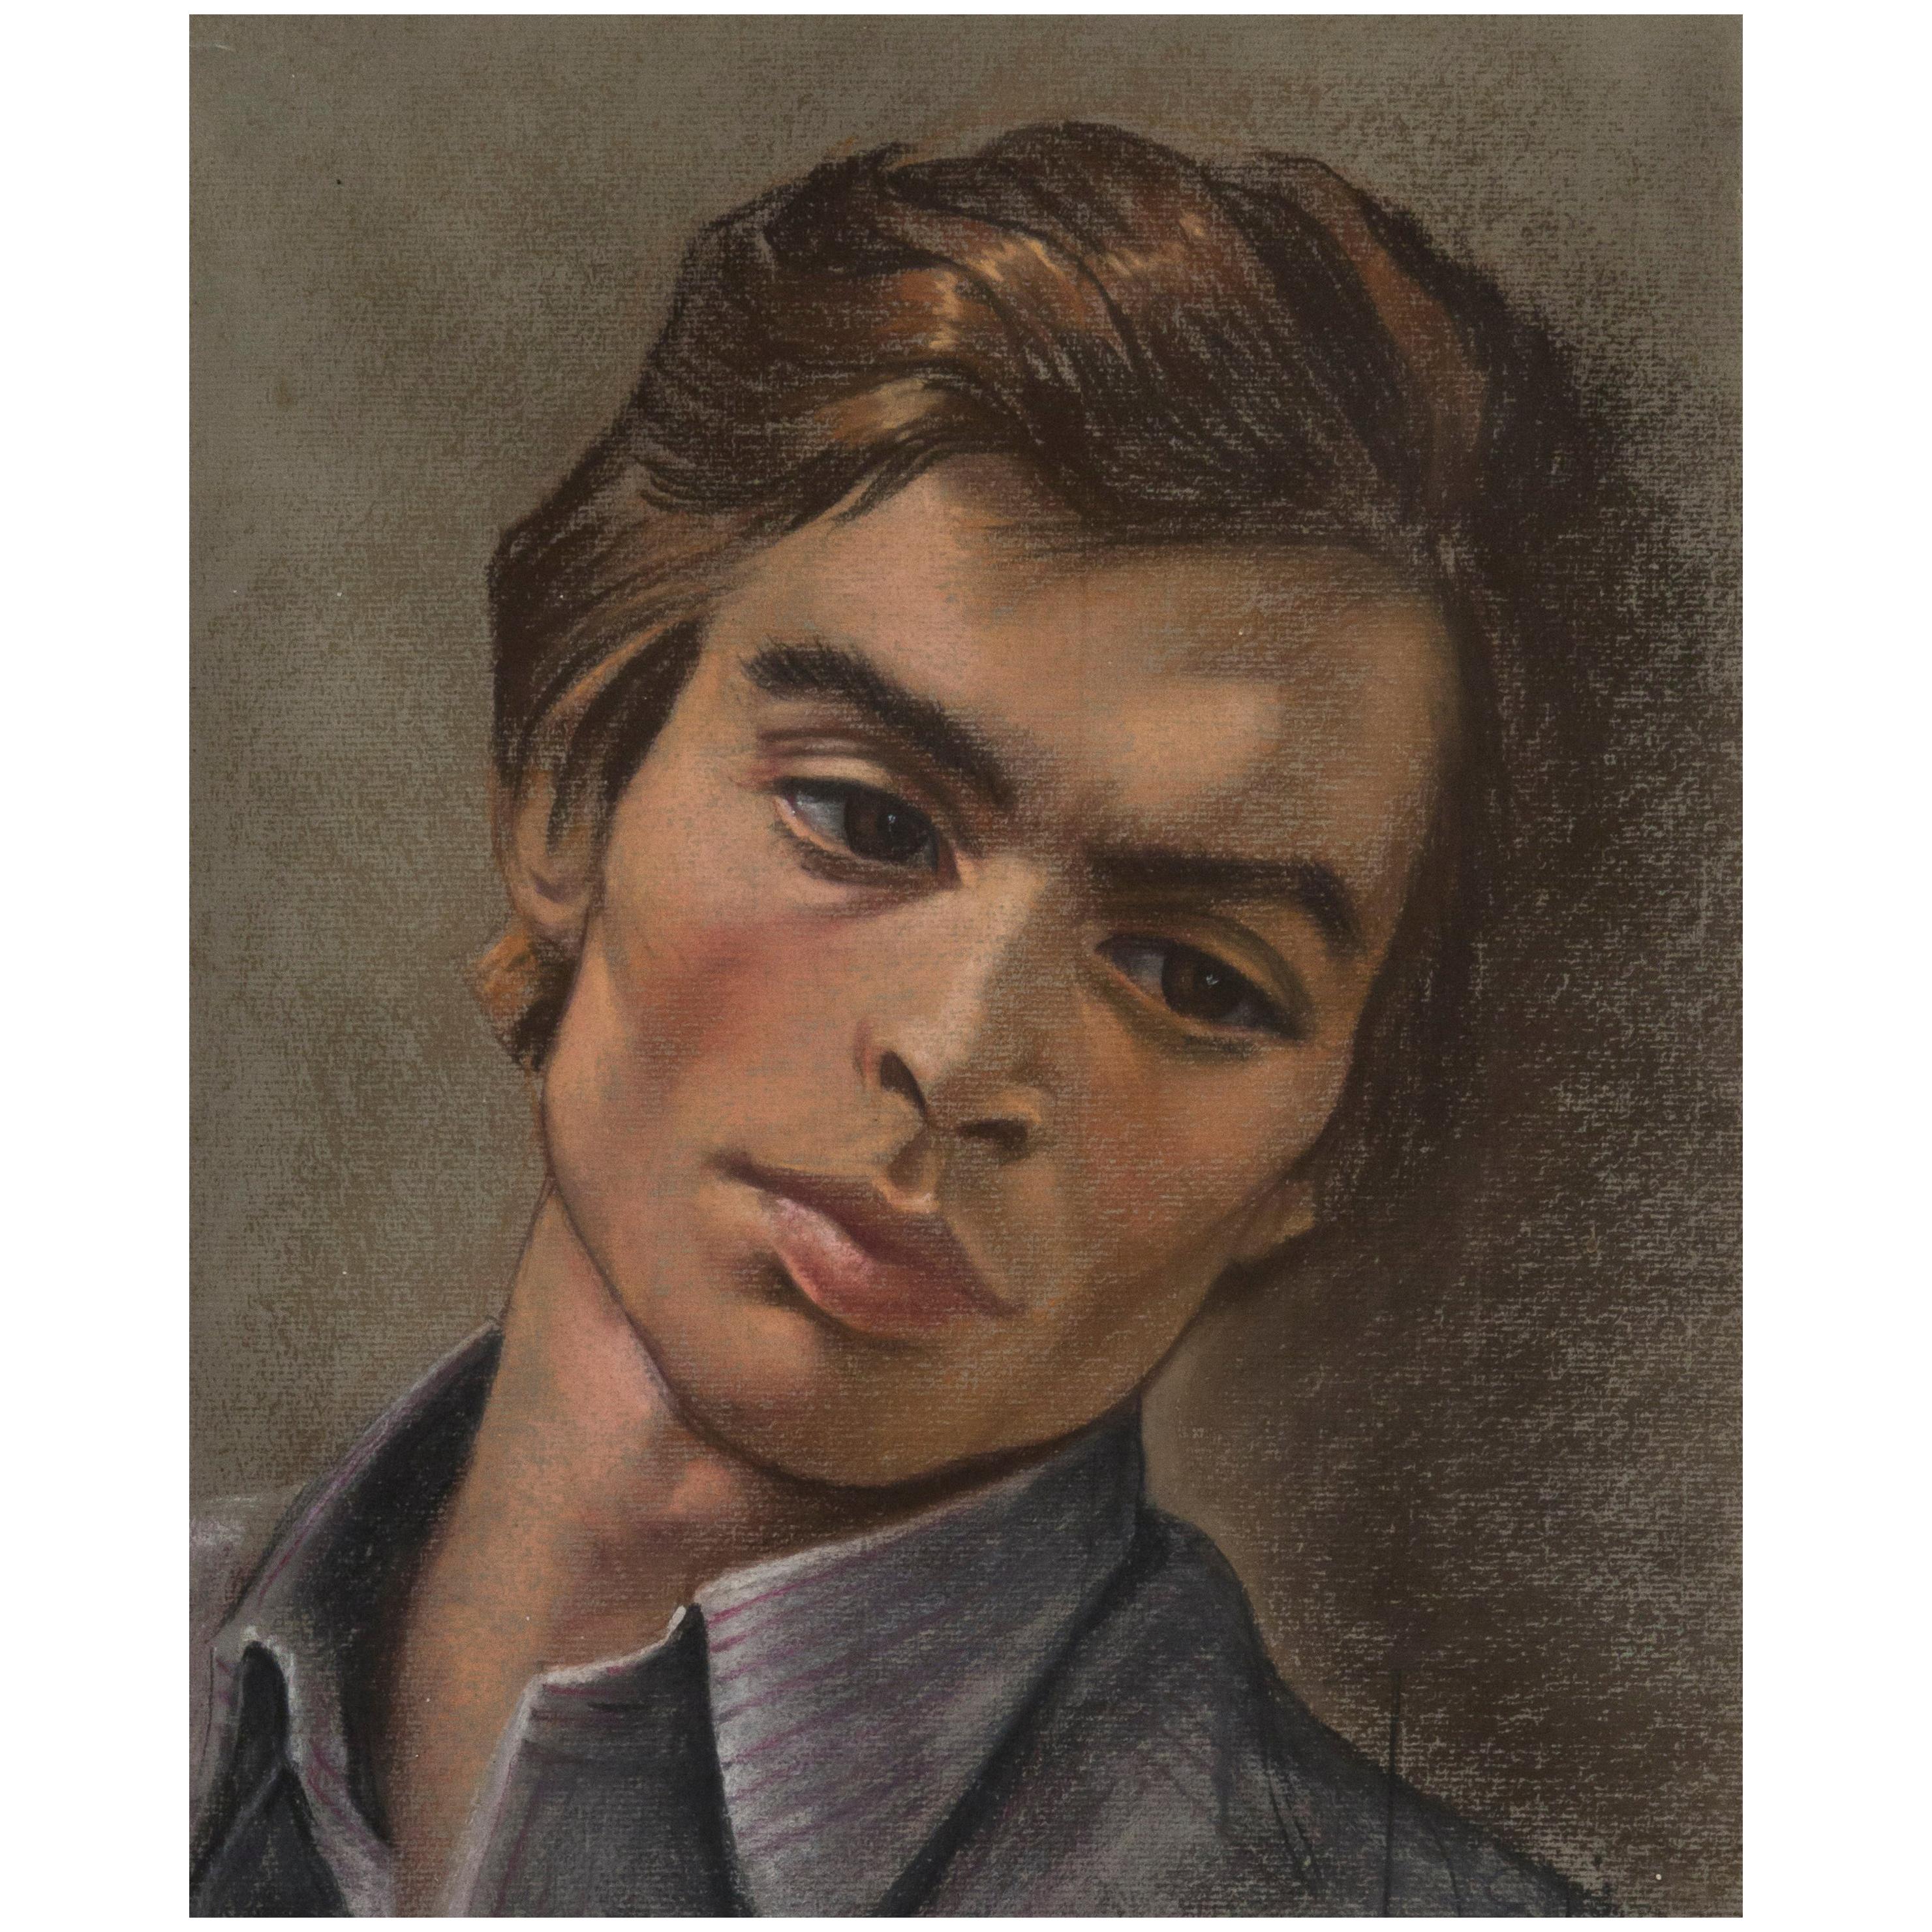 Rudolf Nureyev, 1965 portrait